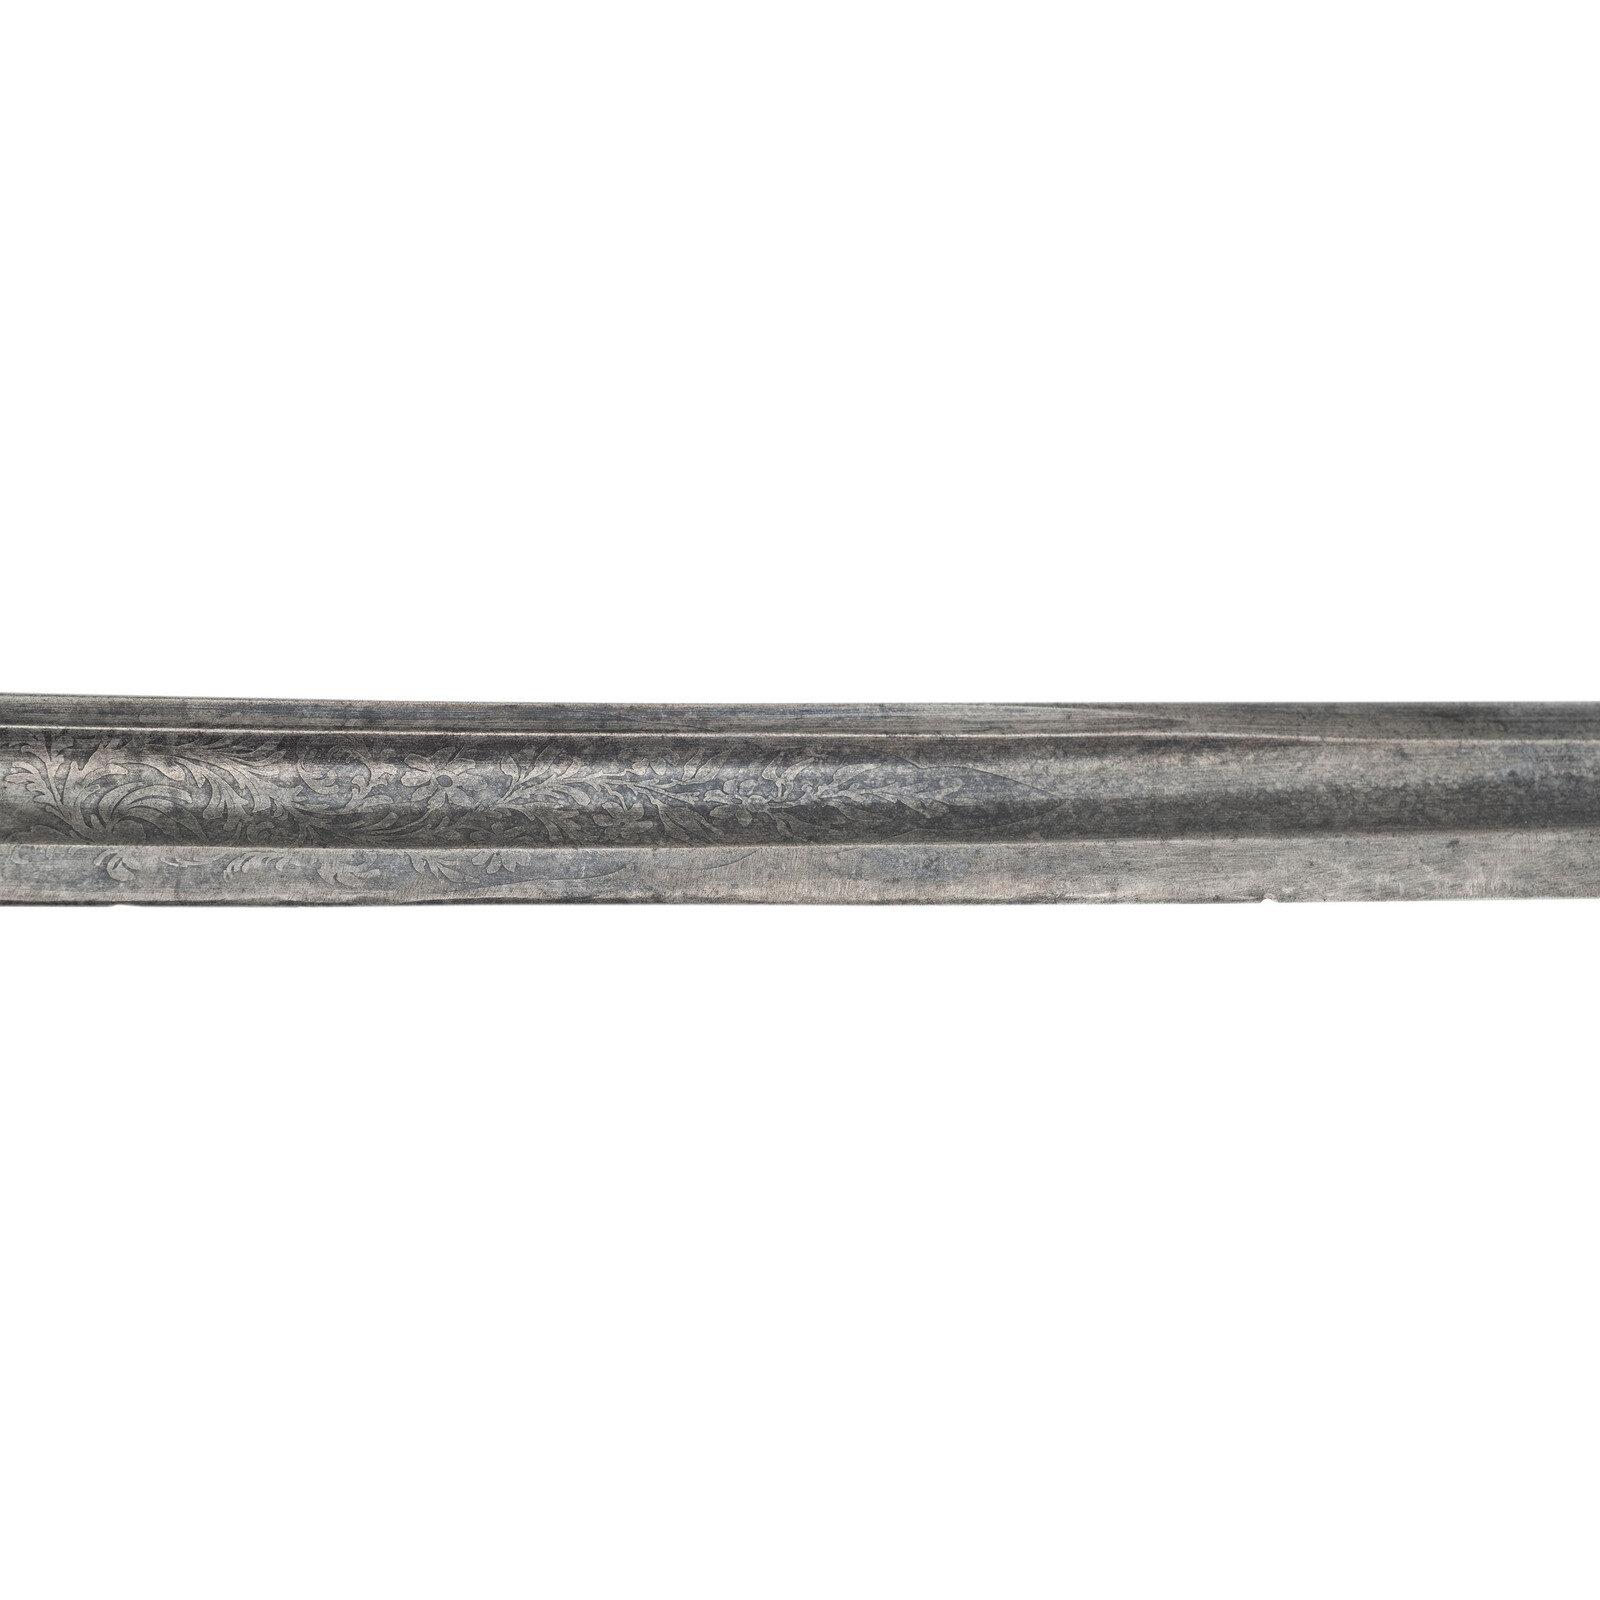 Saurbier Model 1850 Foot Officer's Sword Presented to Lt. J.C. Schoen - KIA at Cold Harbor